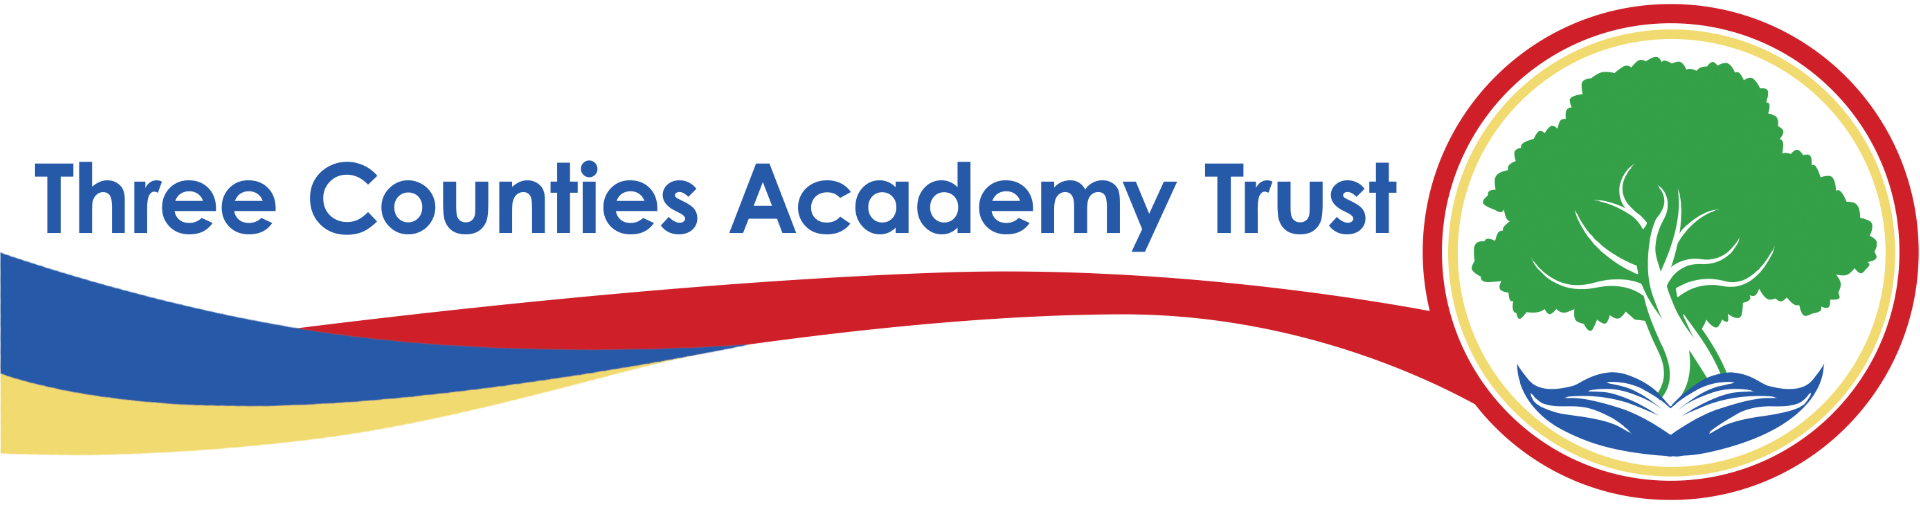 Three Counties Academy Trust